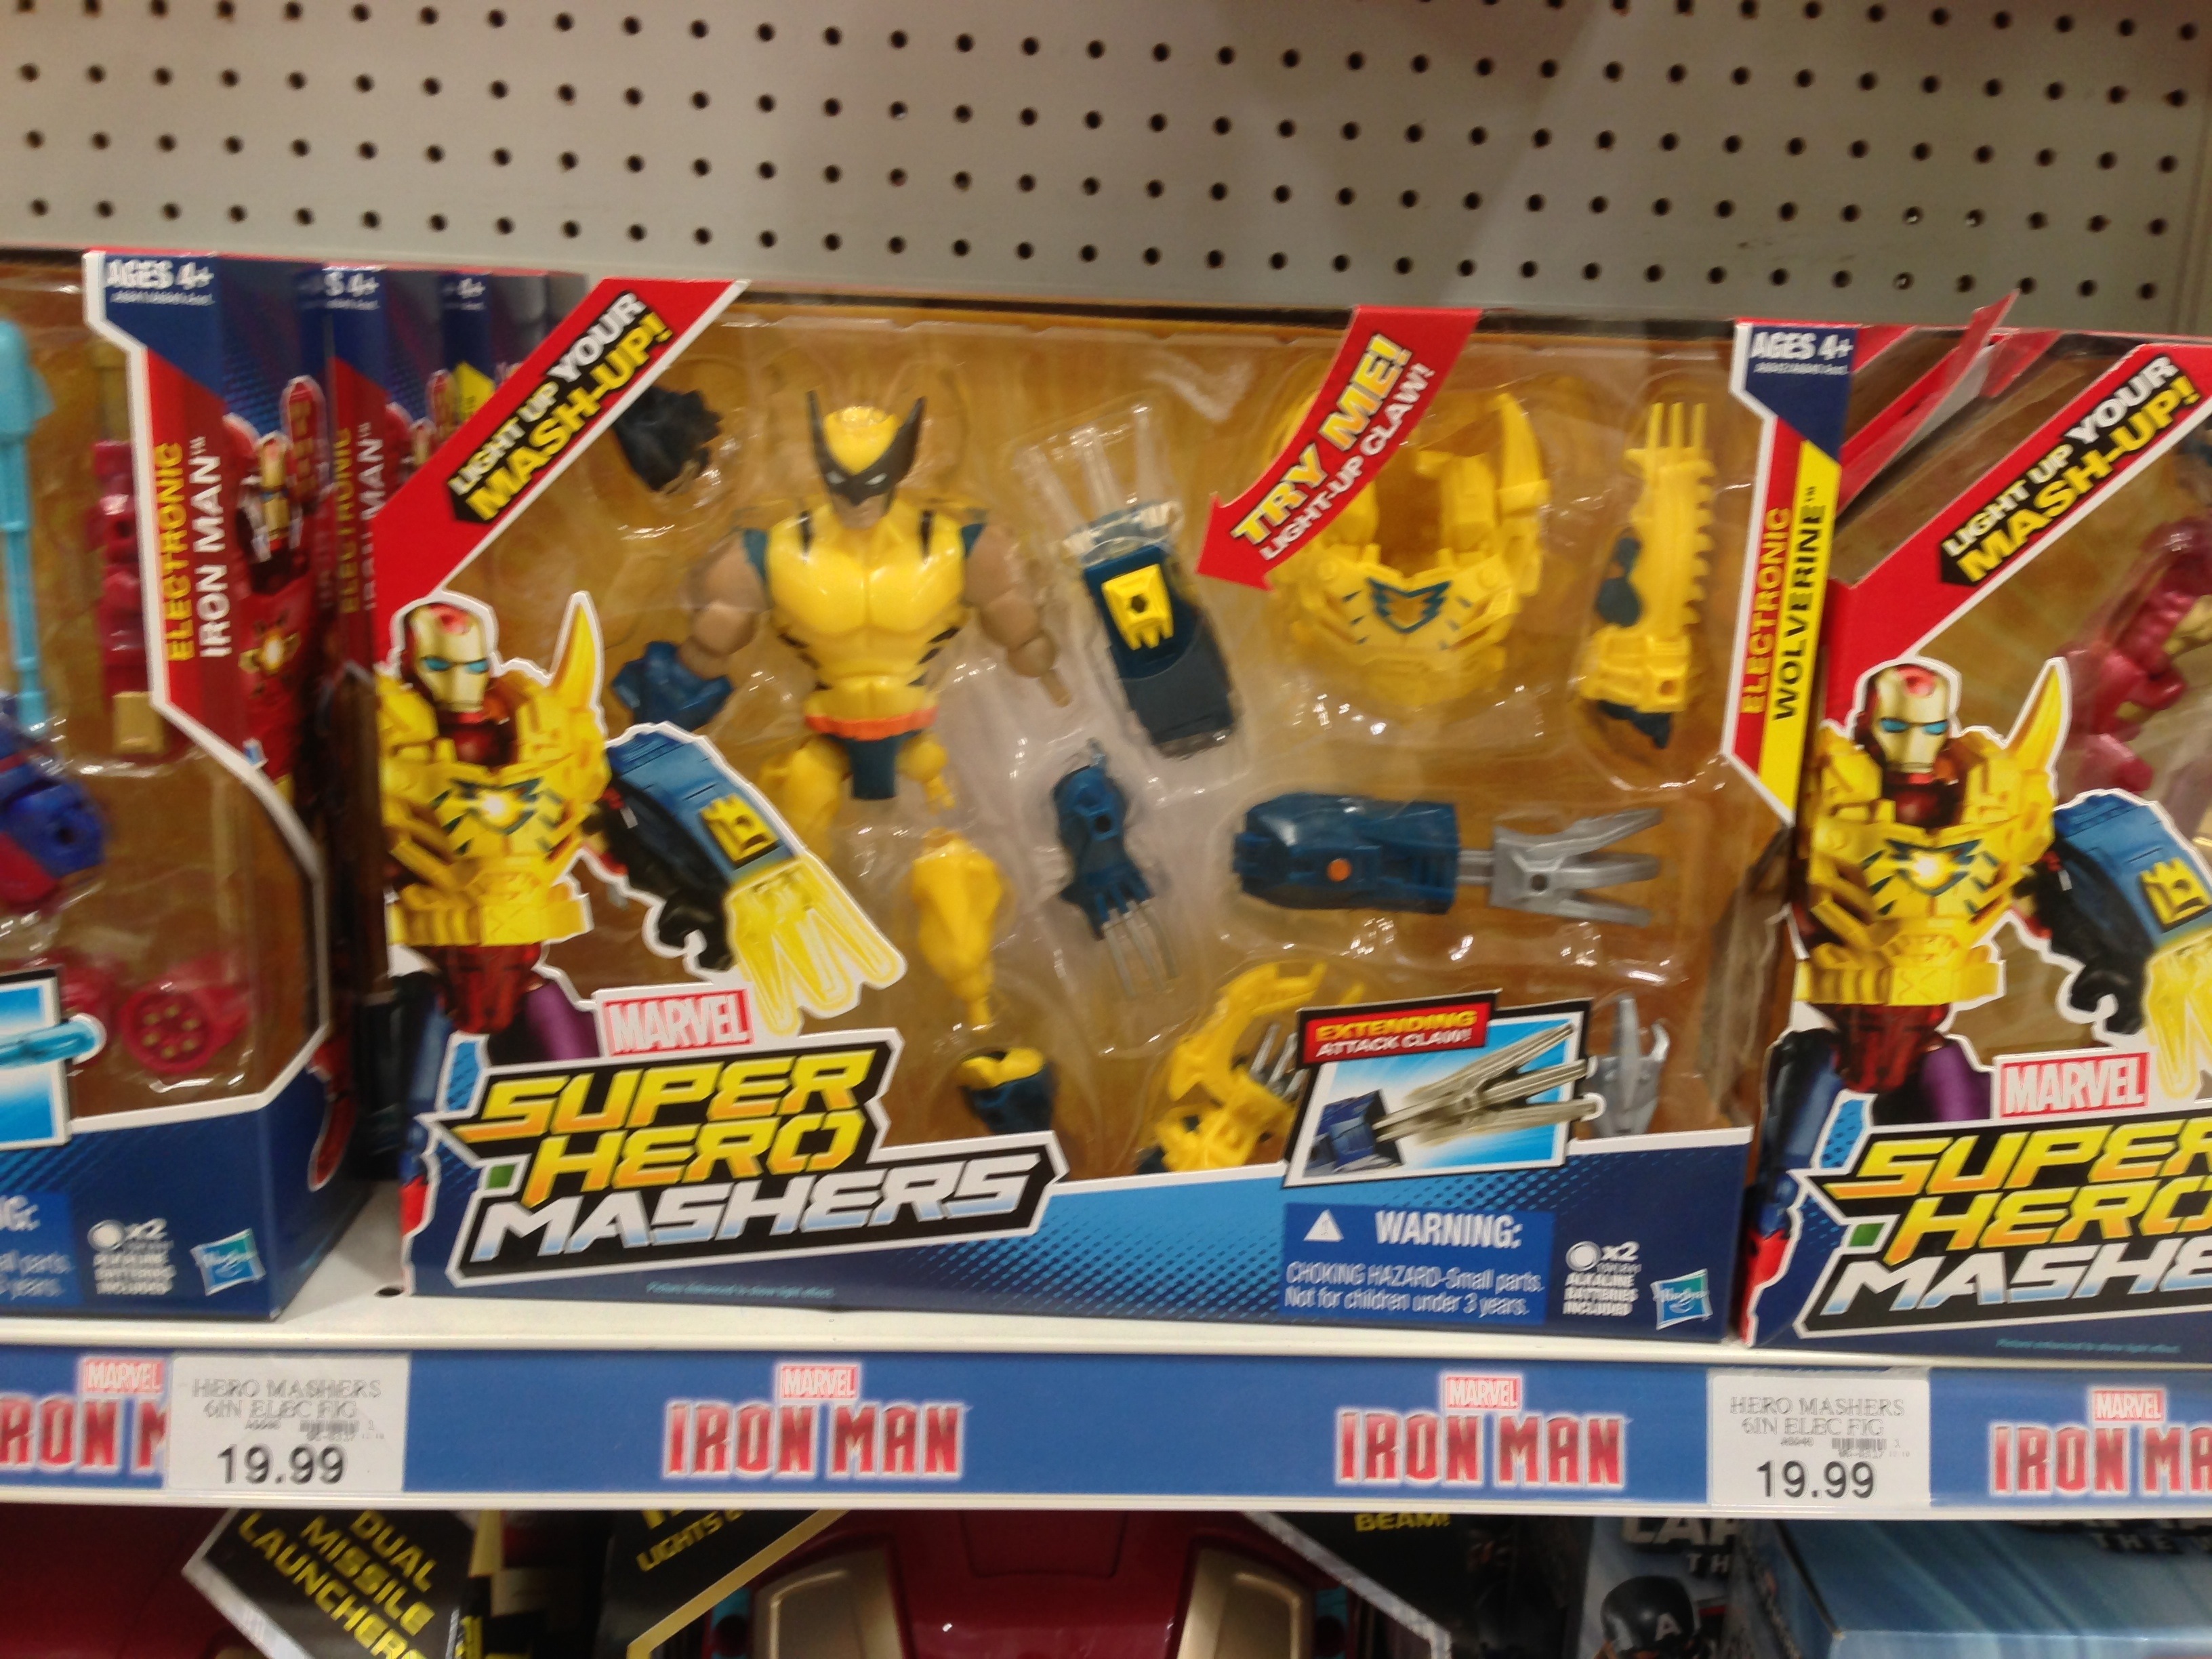 Hasbro 2014 Marvel Super Hero Mashers Figures Released! - Marvel Toy News